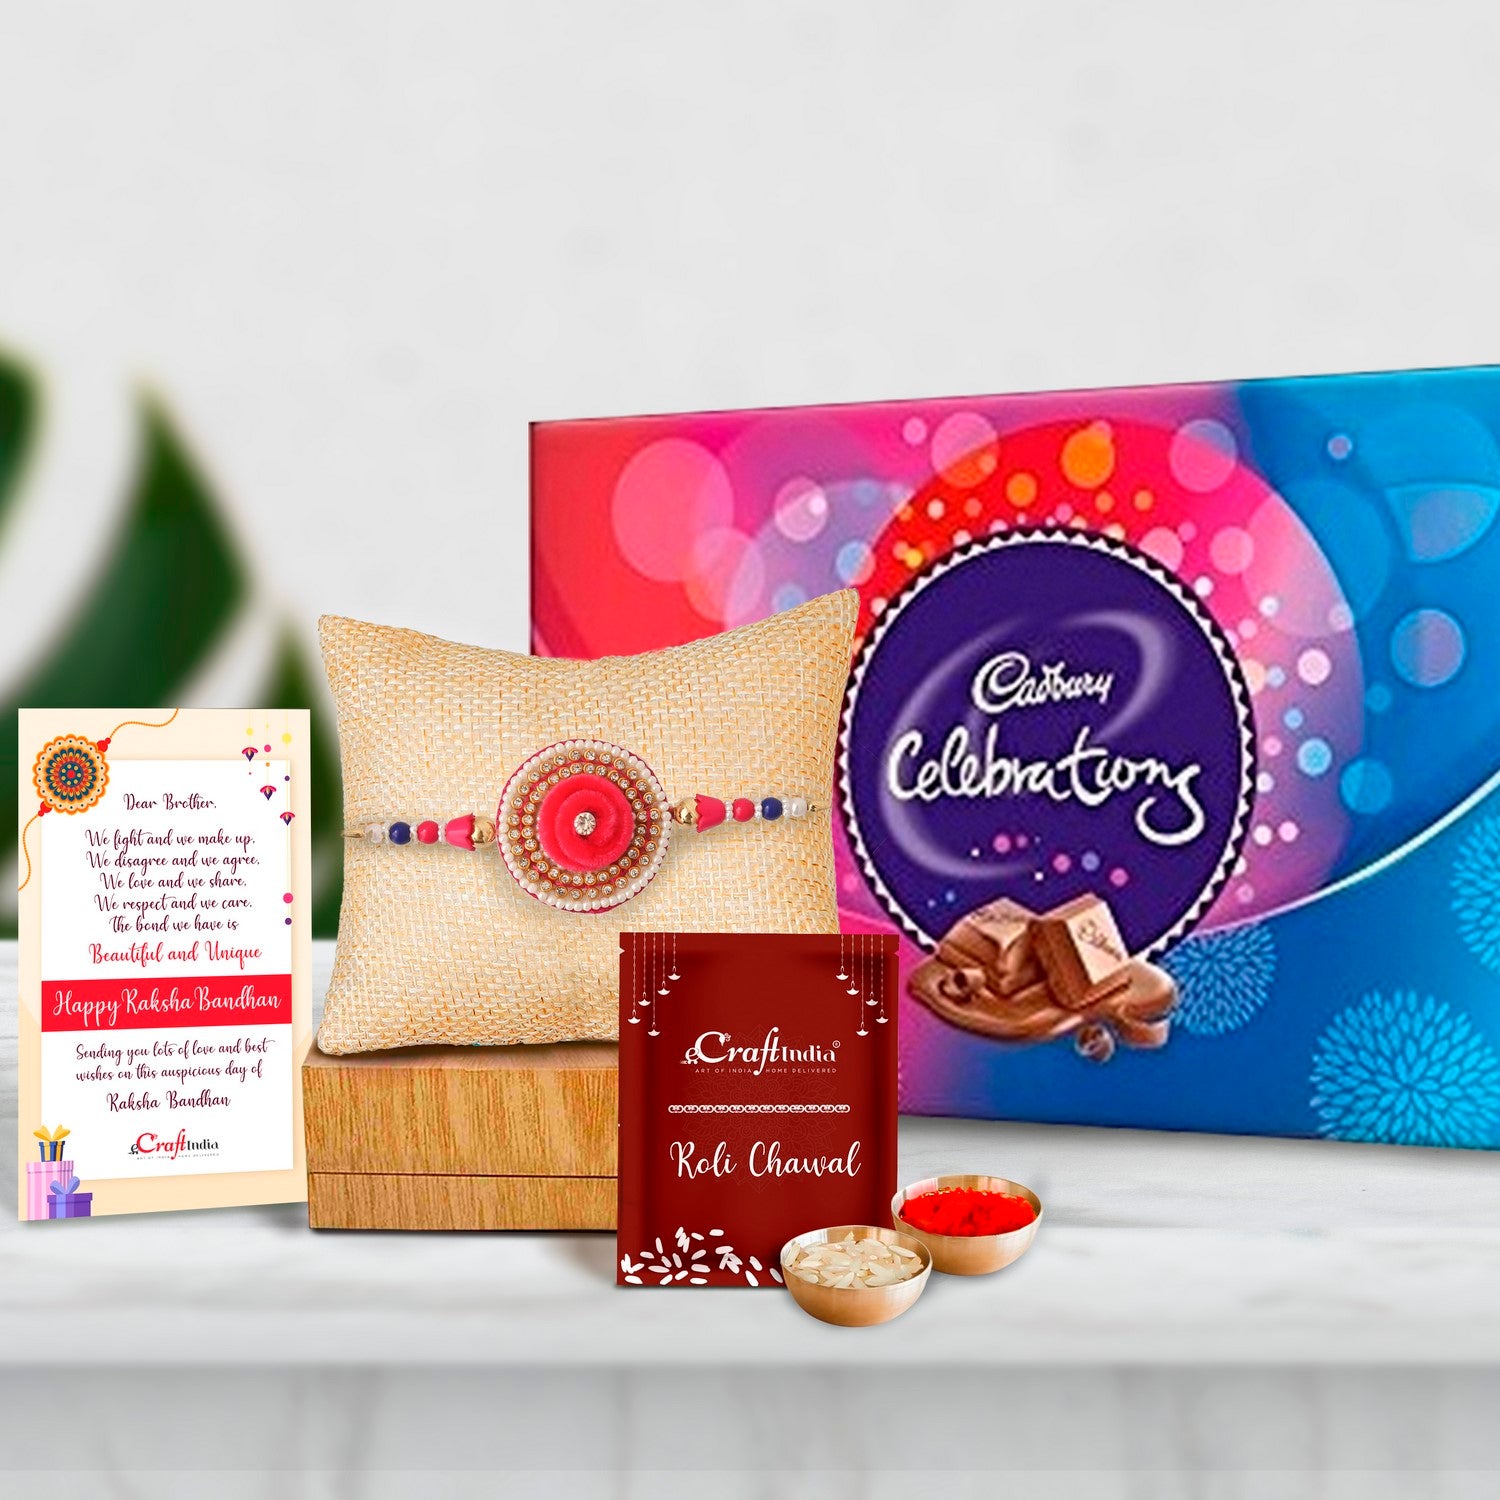 Buy/Send Serene Ganesha Table Top & Cadbury Celebrations Online- FNP